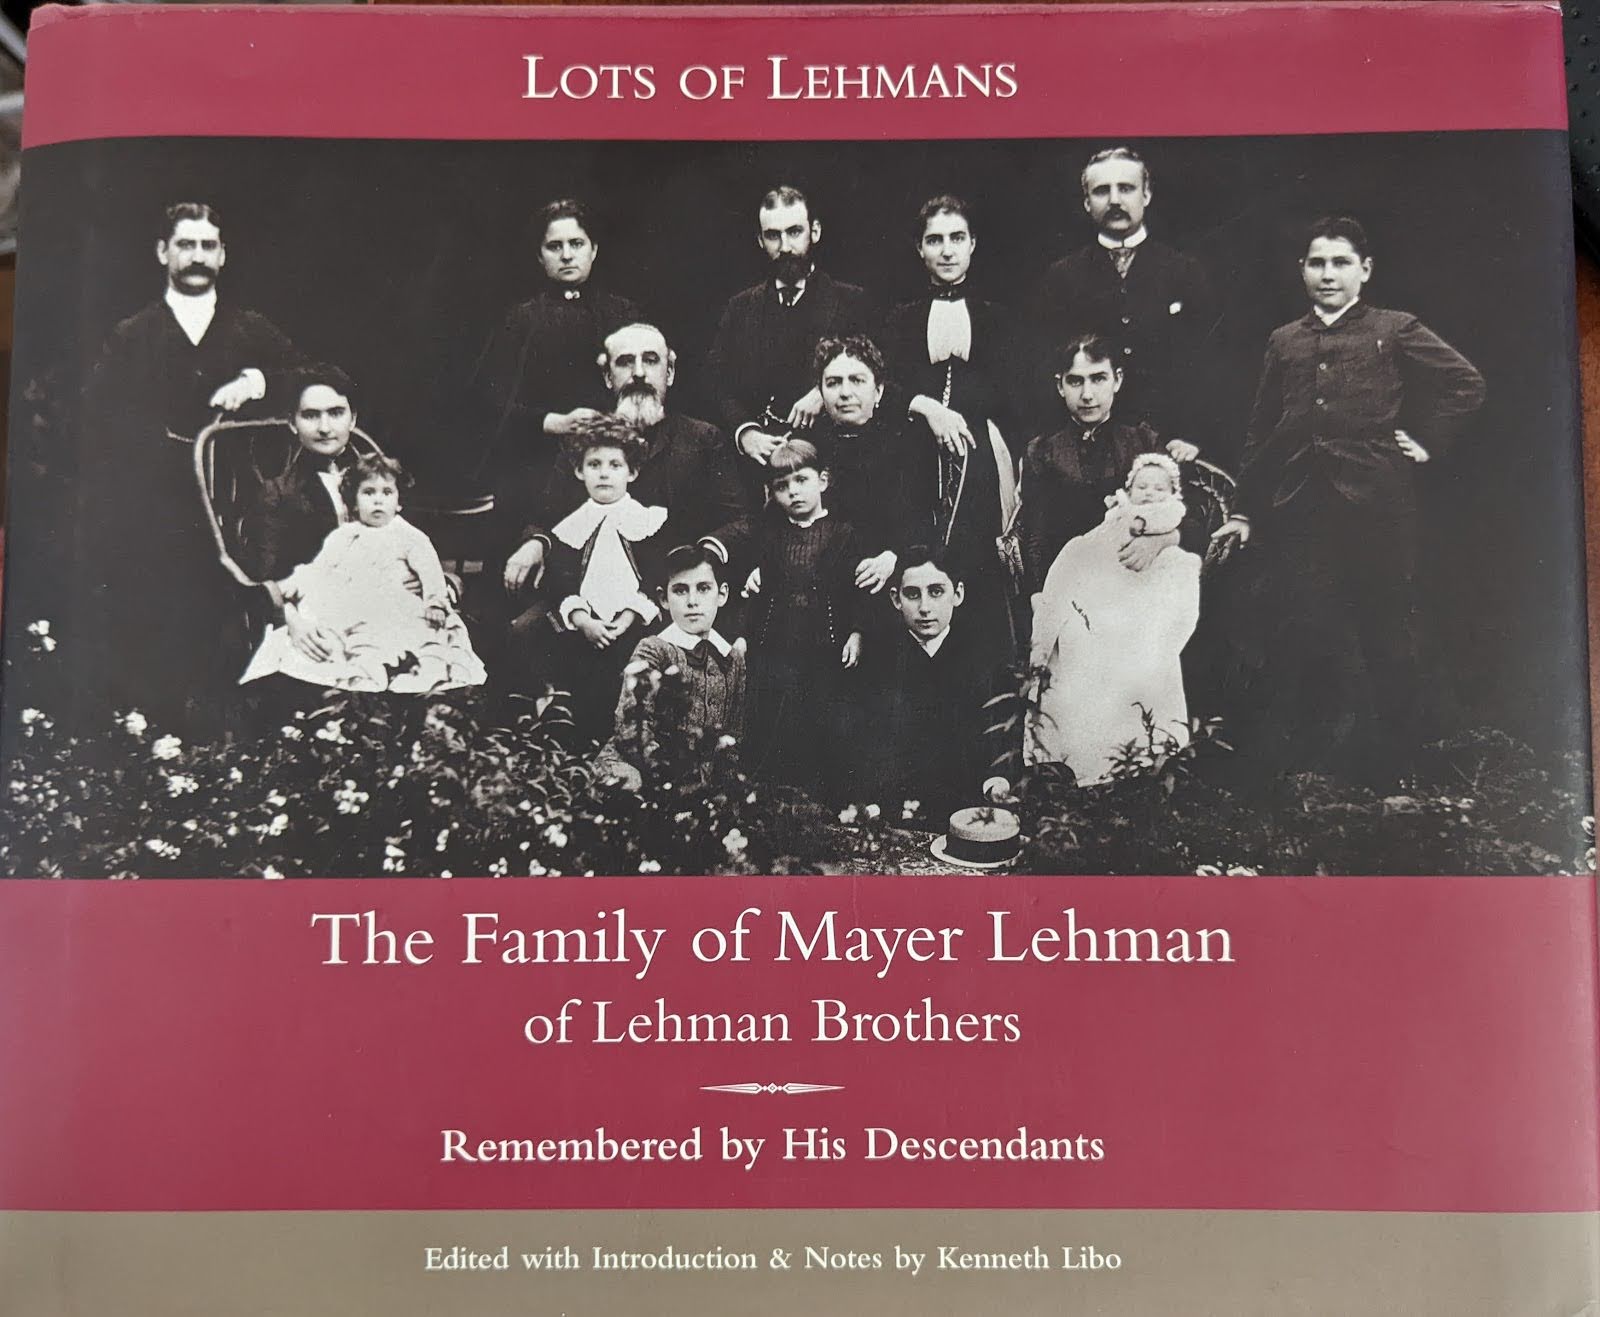 From Lehman to Bingham